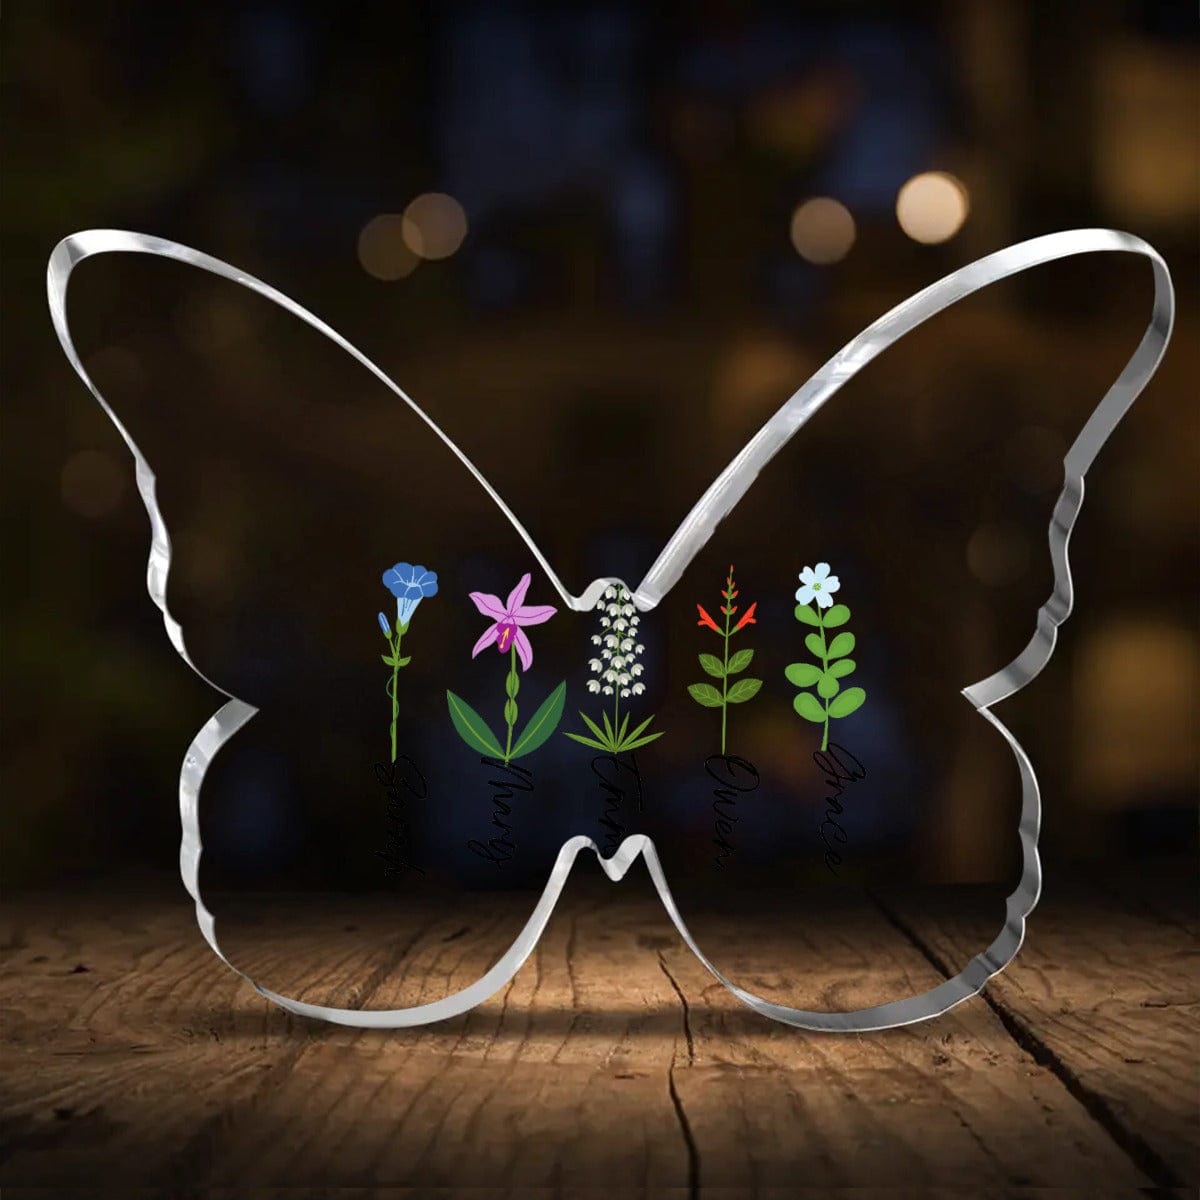 Yoycol Mother's / Grandma's Garden - Butterfly Shaped Acrylic Desktop Ornament